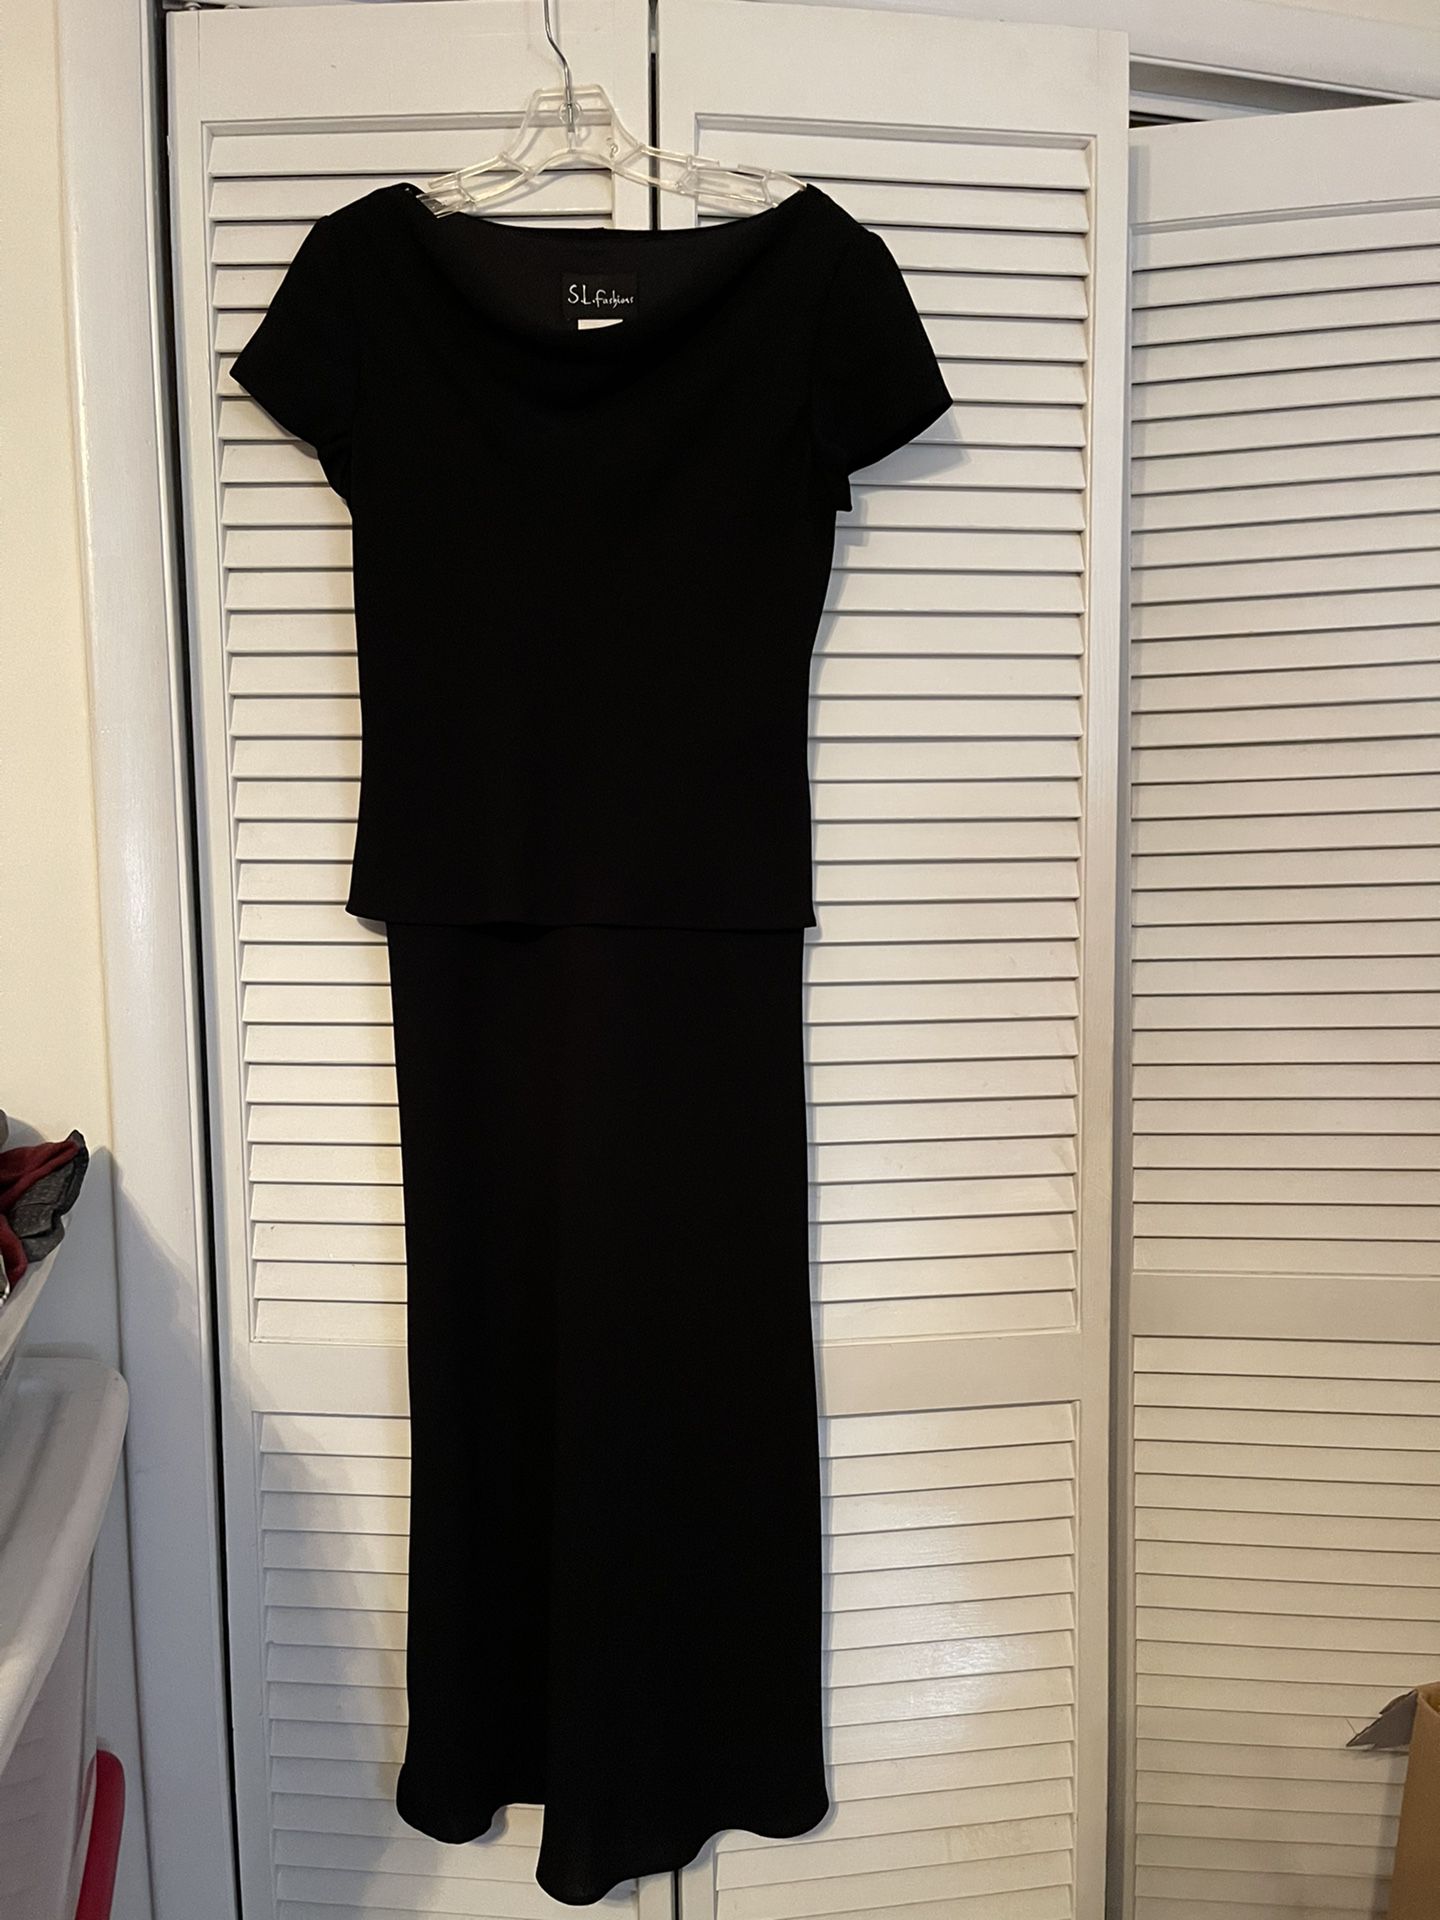 S L Fashions Size 6 Floor Length Black Dress